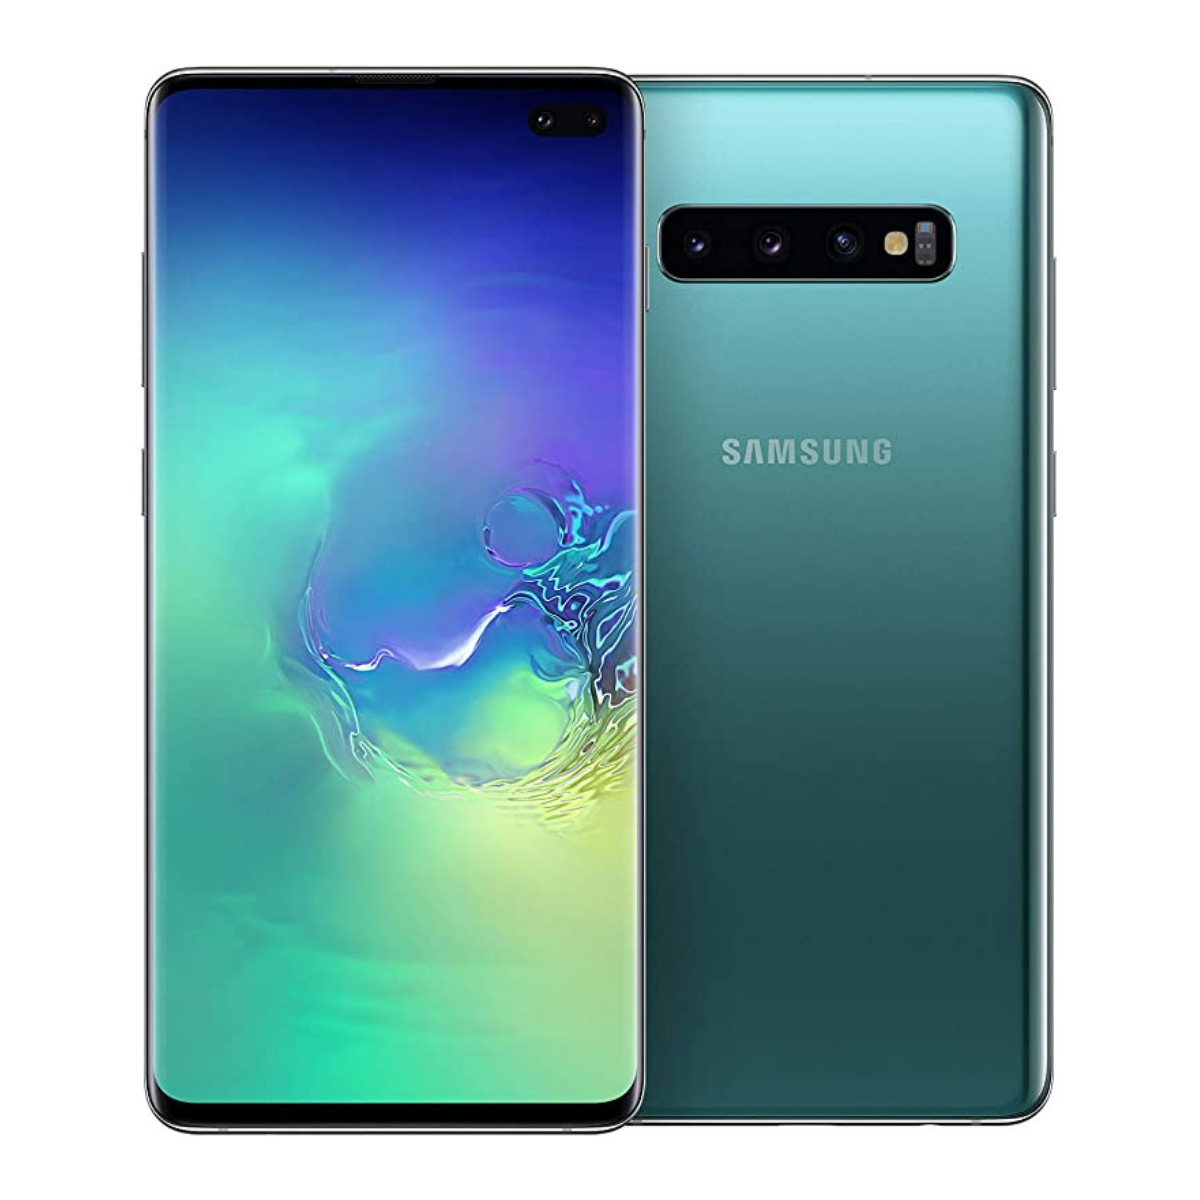 Sim Free Samsung Galaxy S10 Plus 128GB Unlocked Mobile Phone - Prism Green